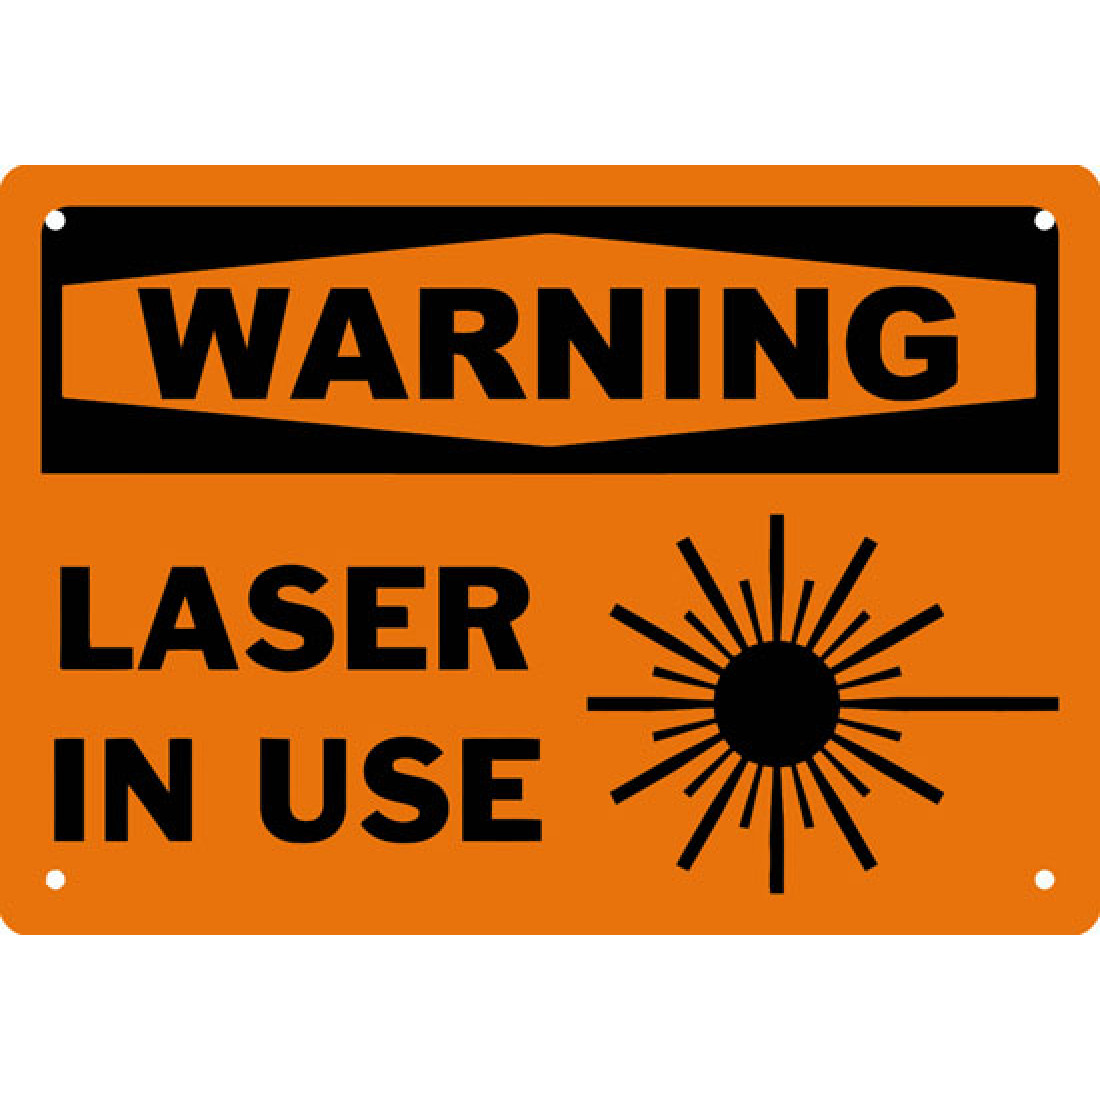 laser in use sign pdf